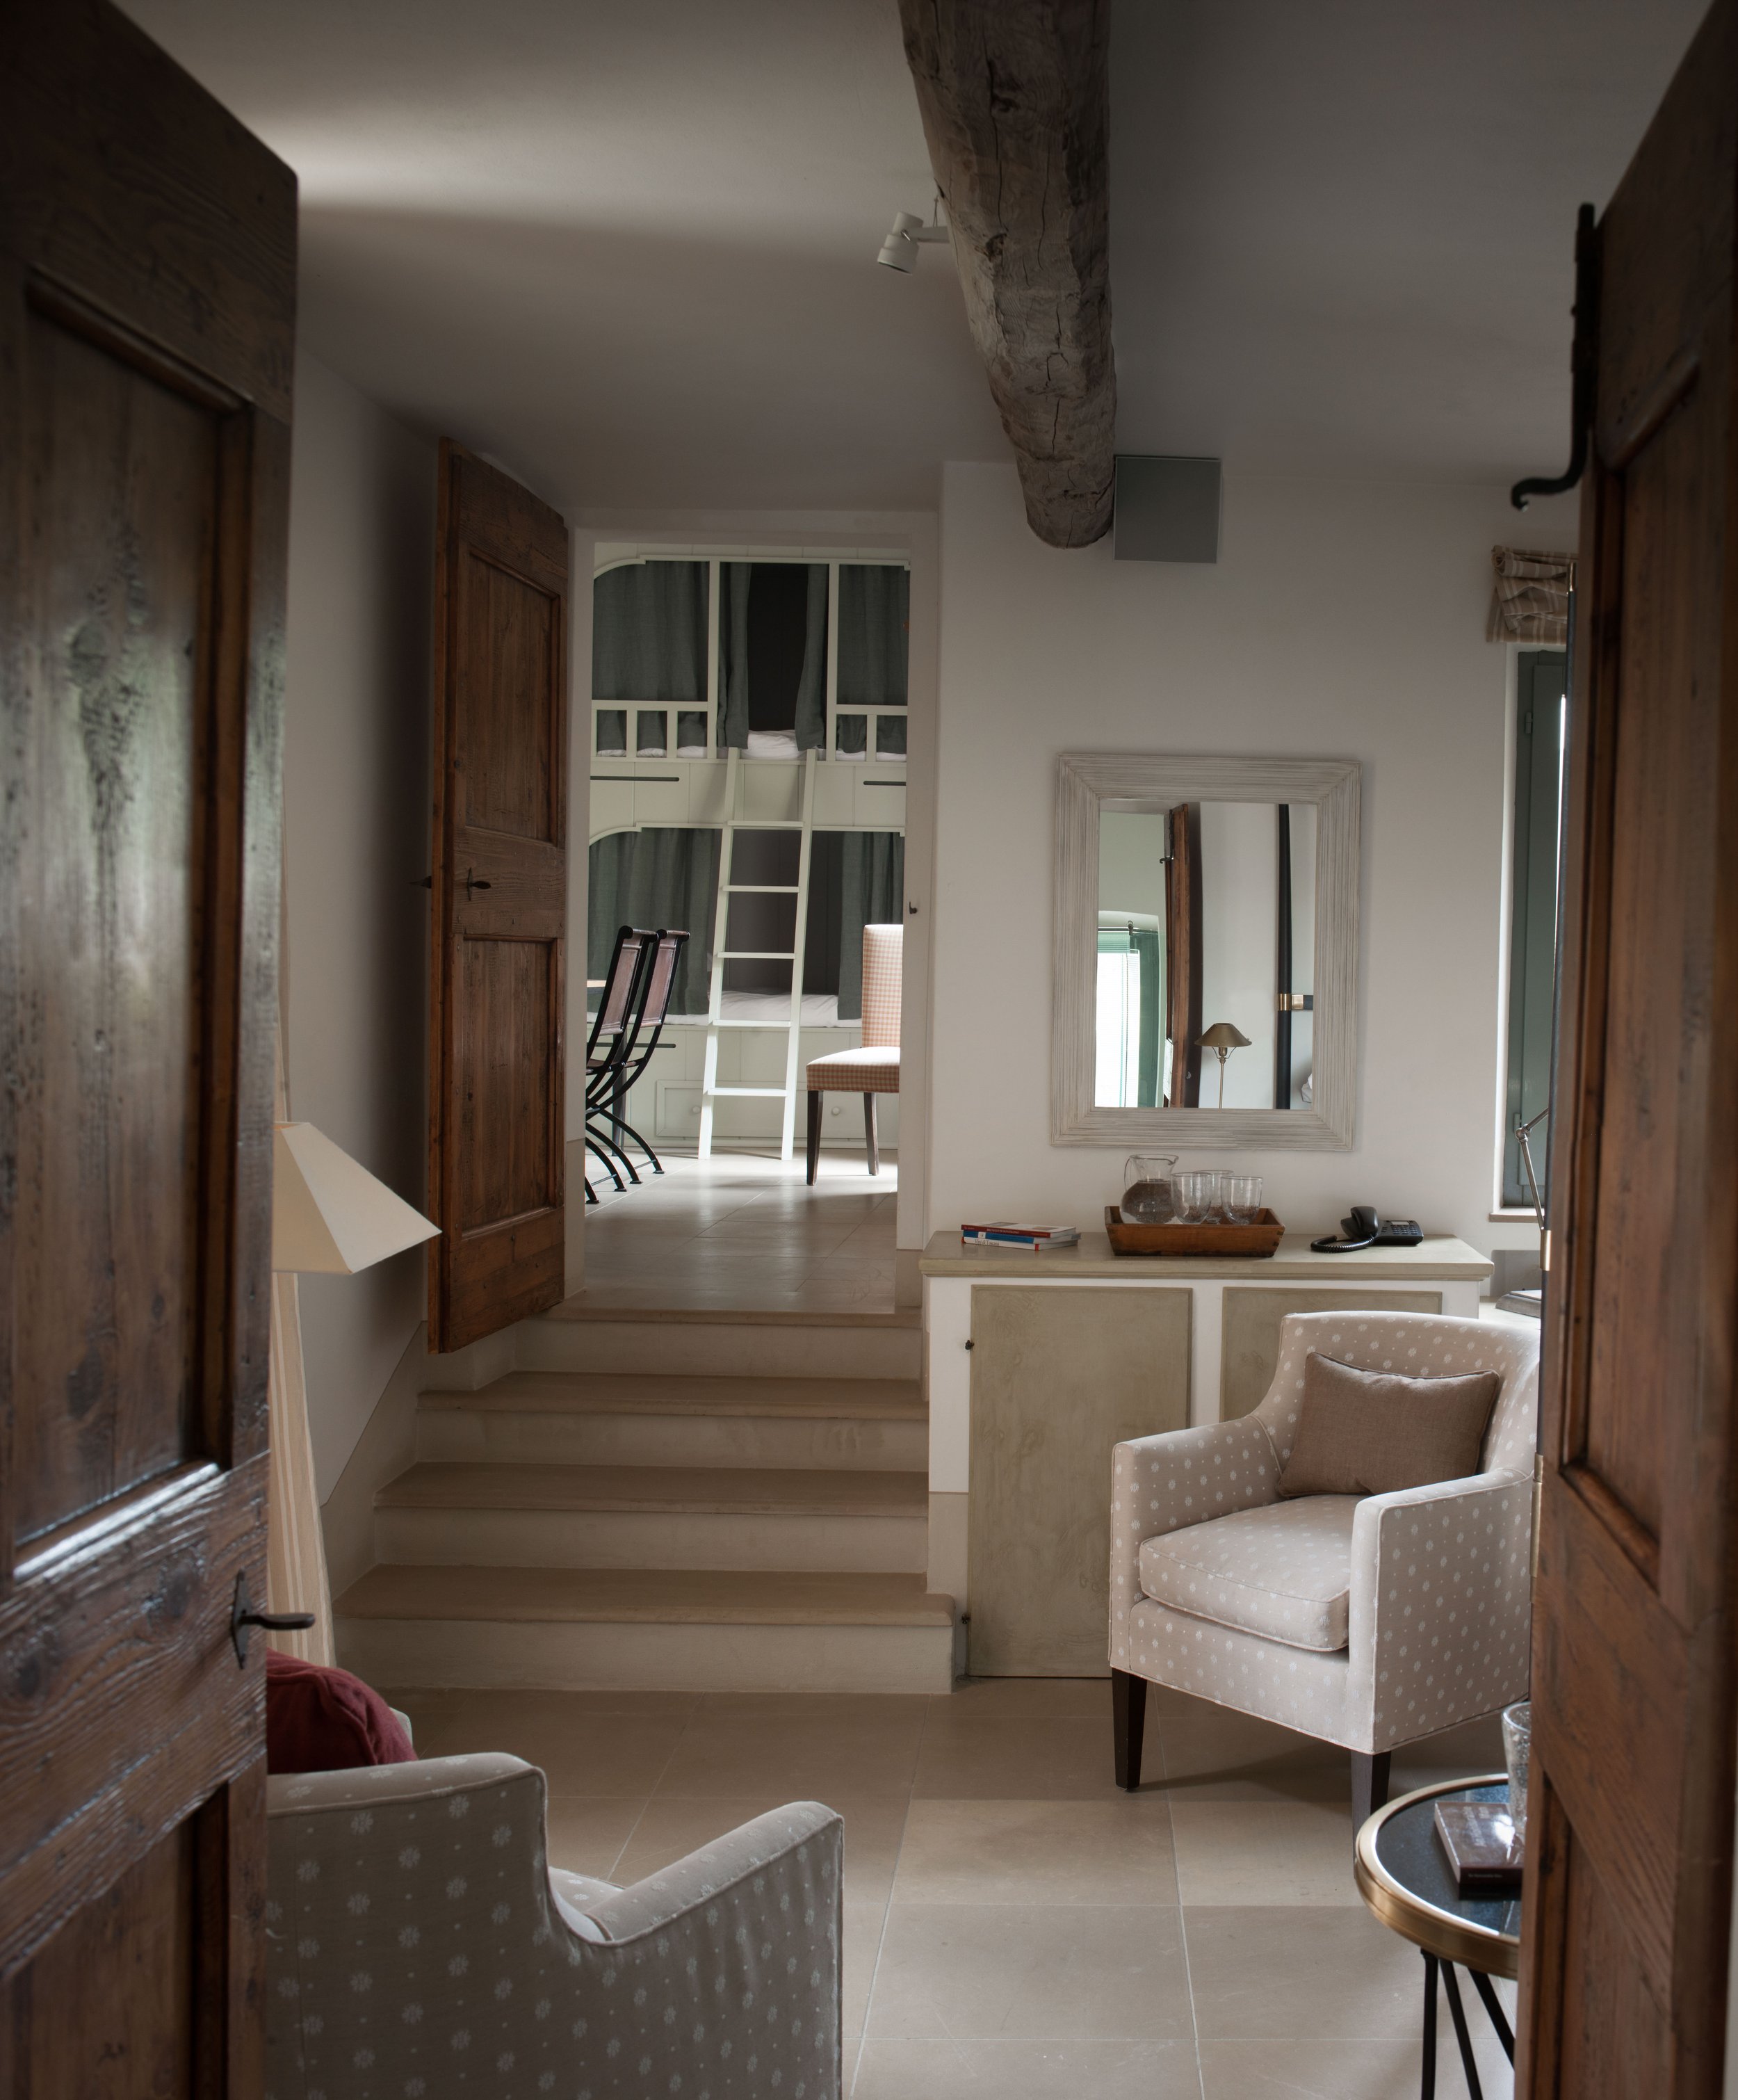 Francis York Exclusive Luxury Villa Rental in Umbria, Italy 21.jpg